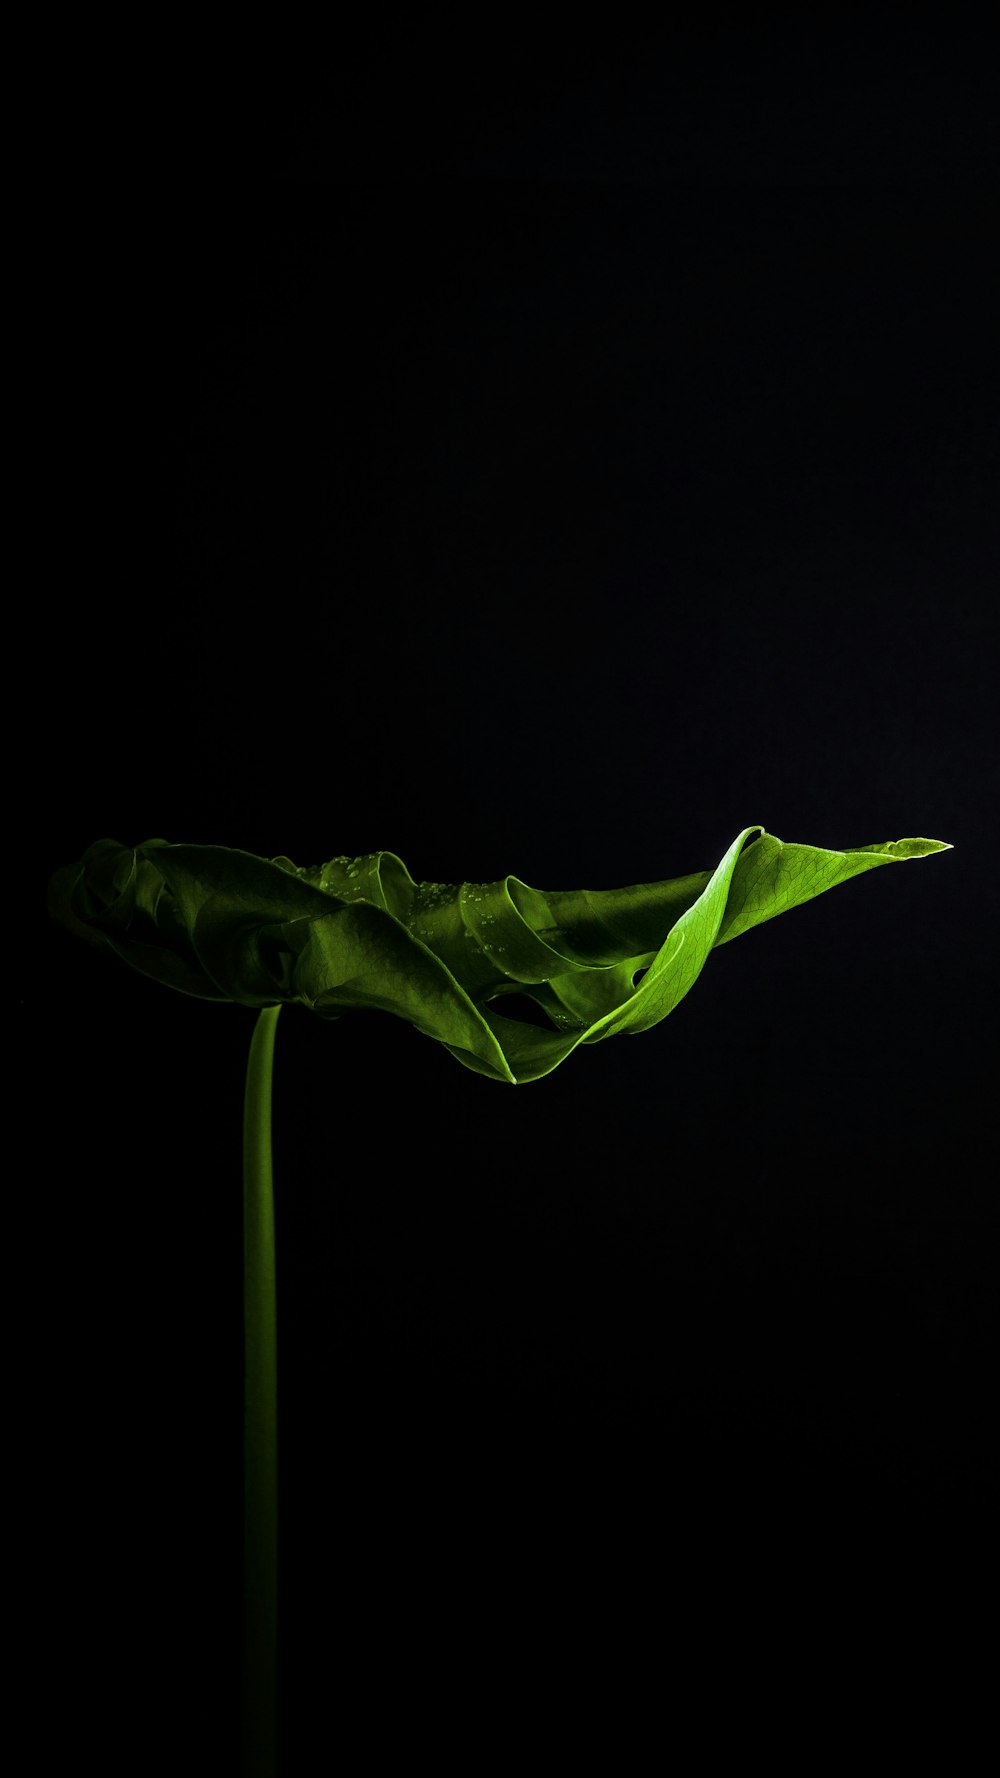 green leaf in black background